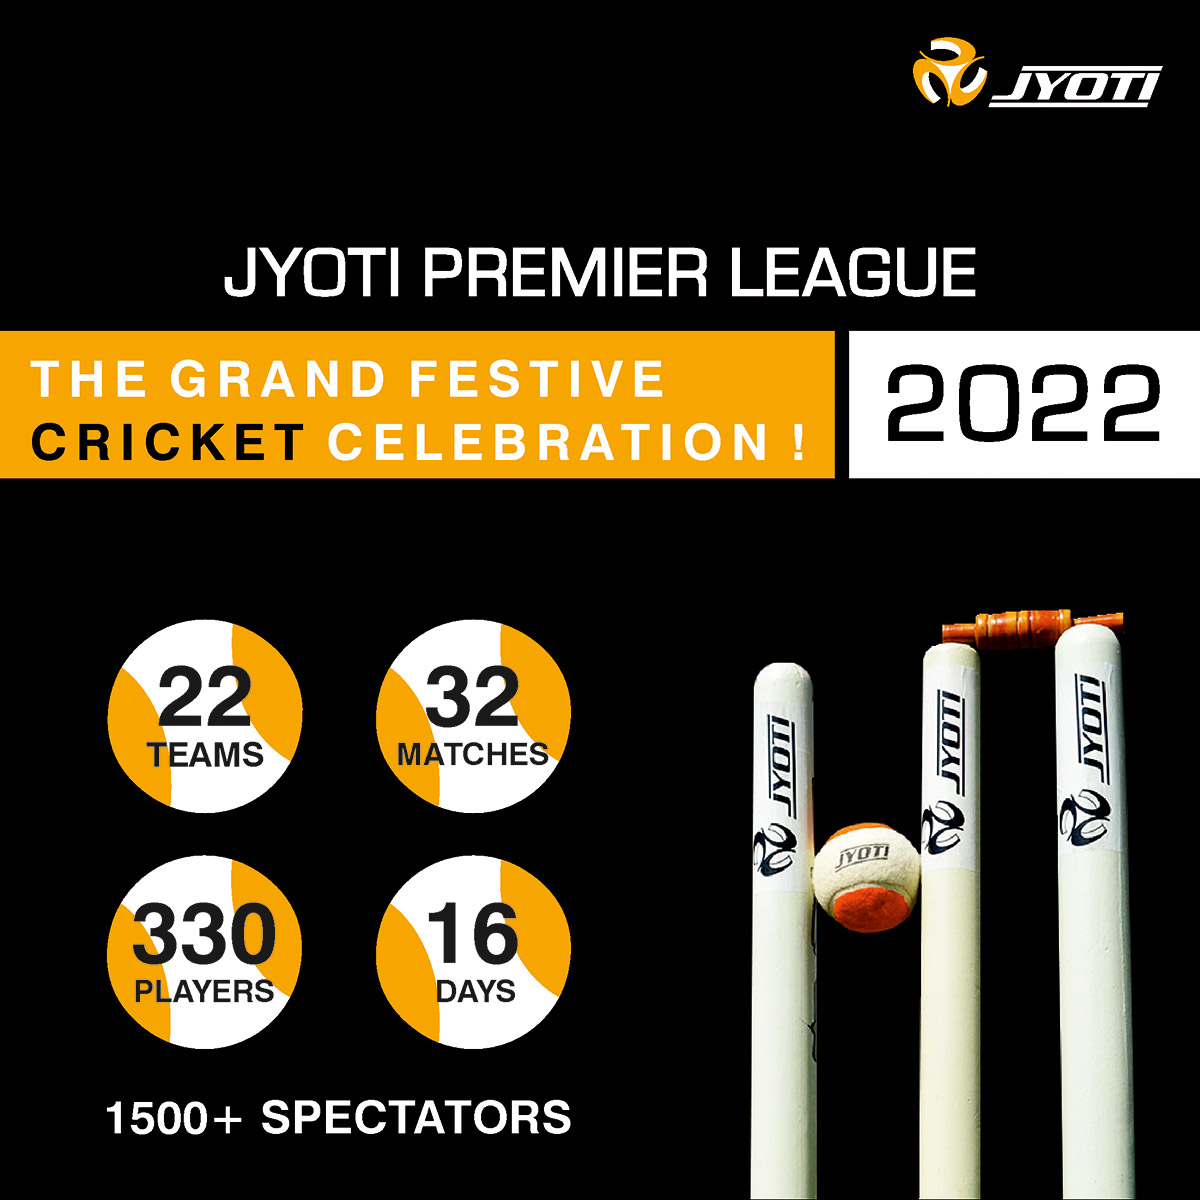 Jyoti Premier League 2022